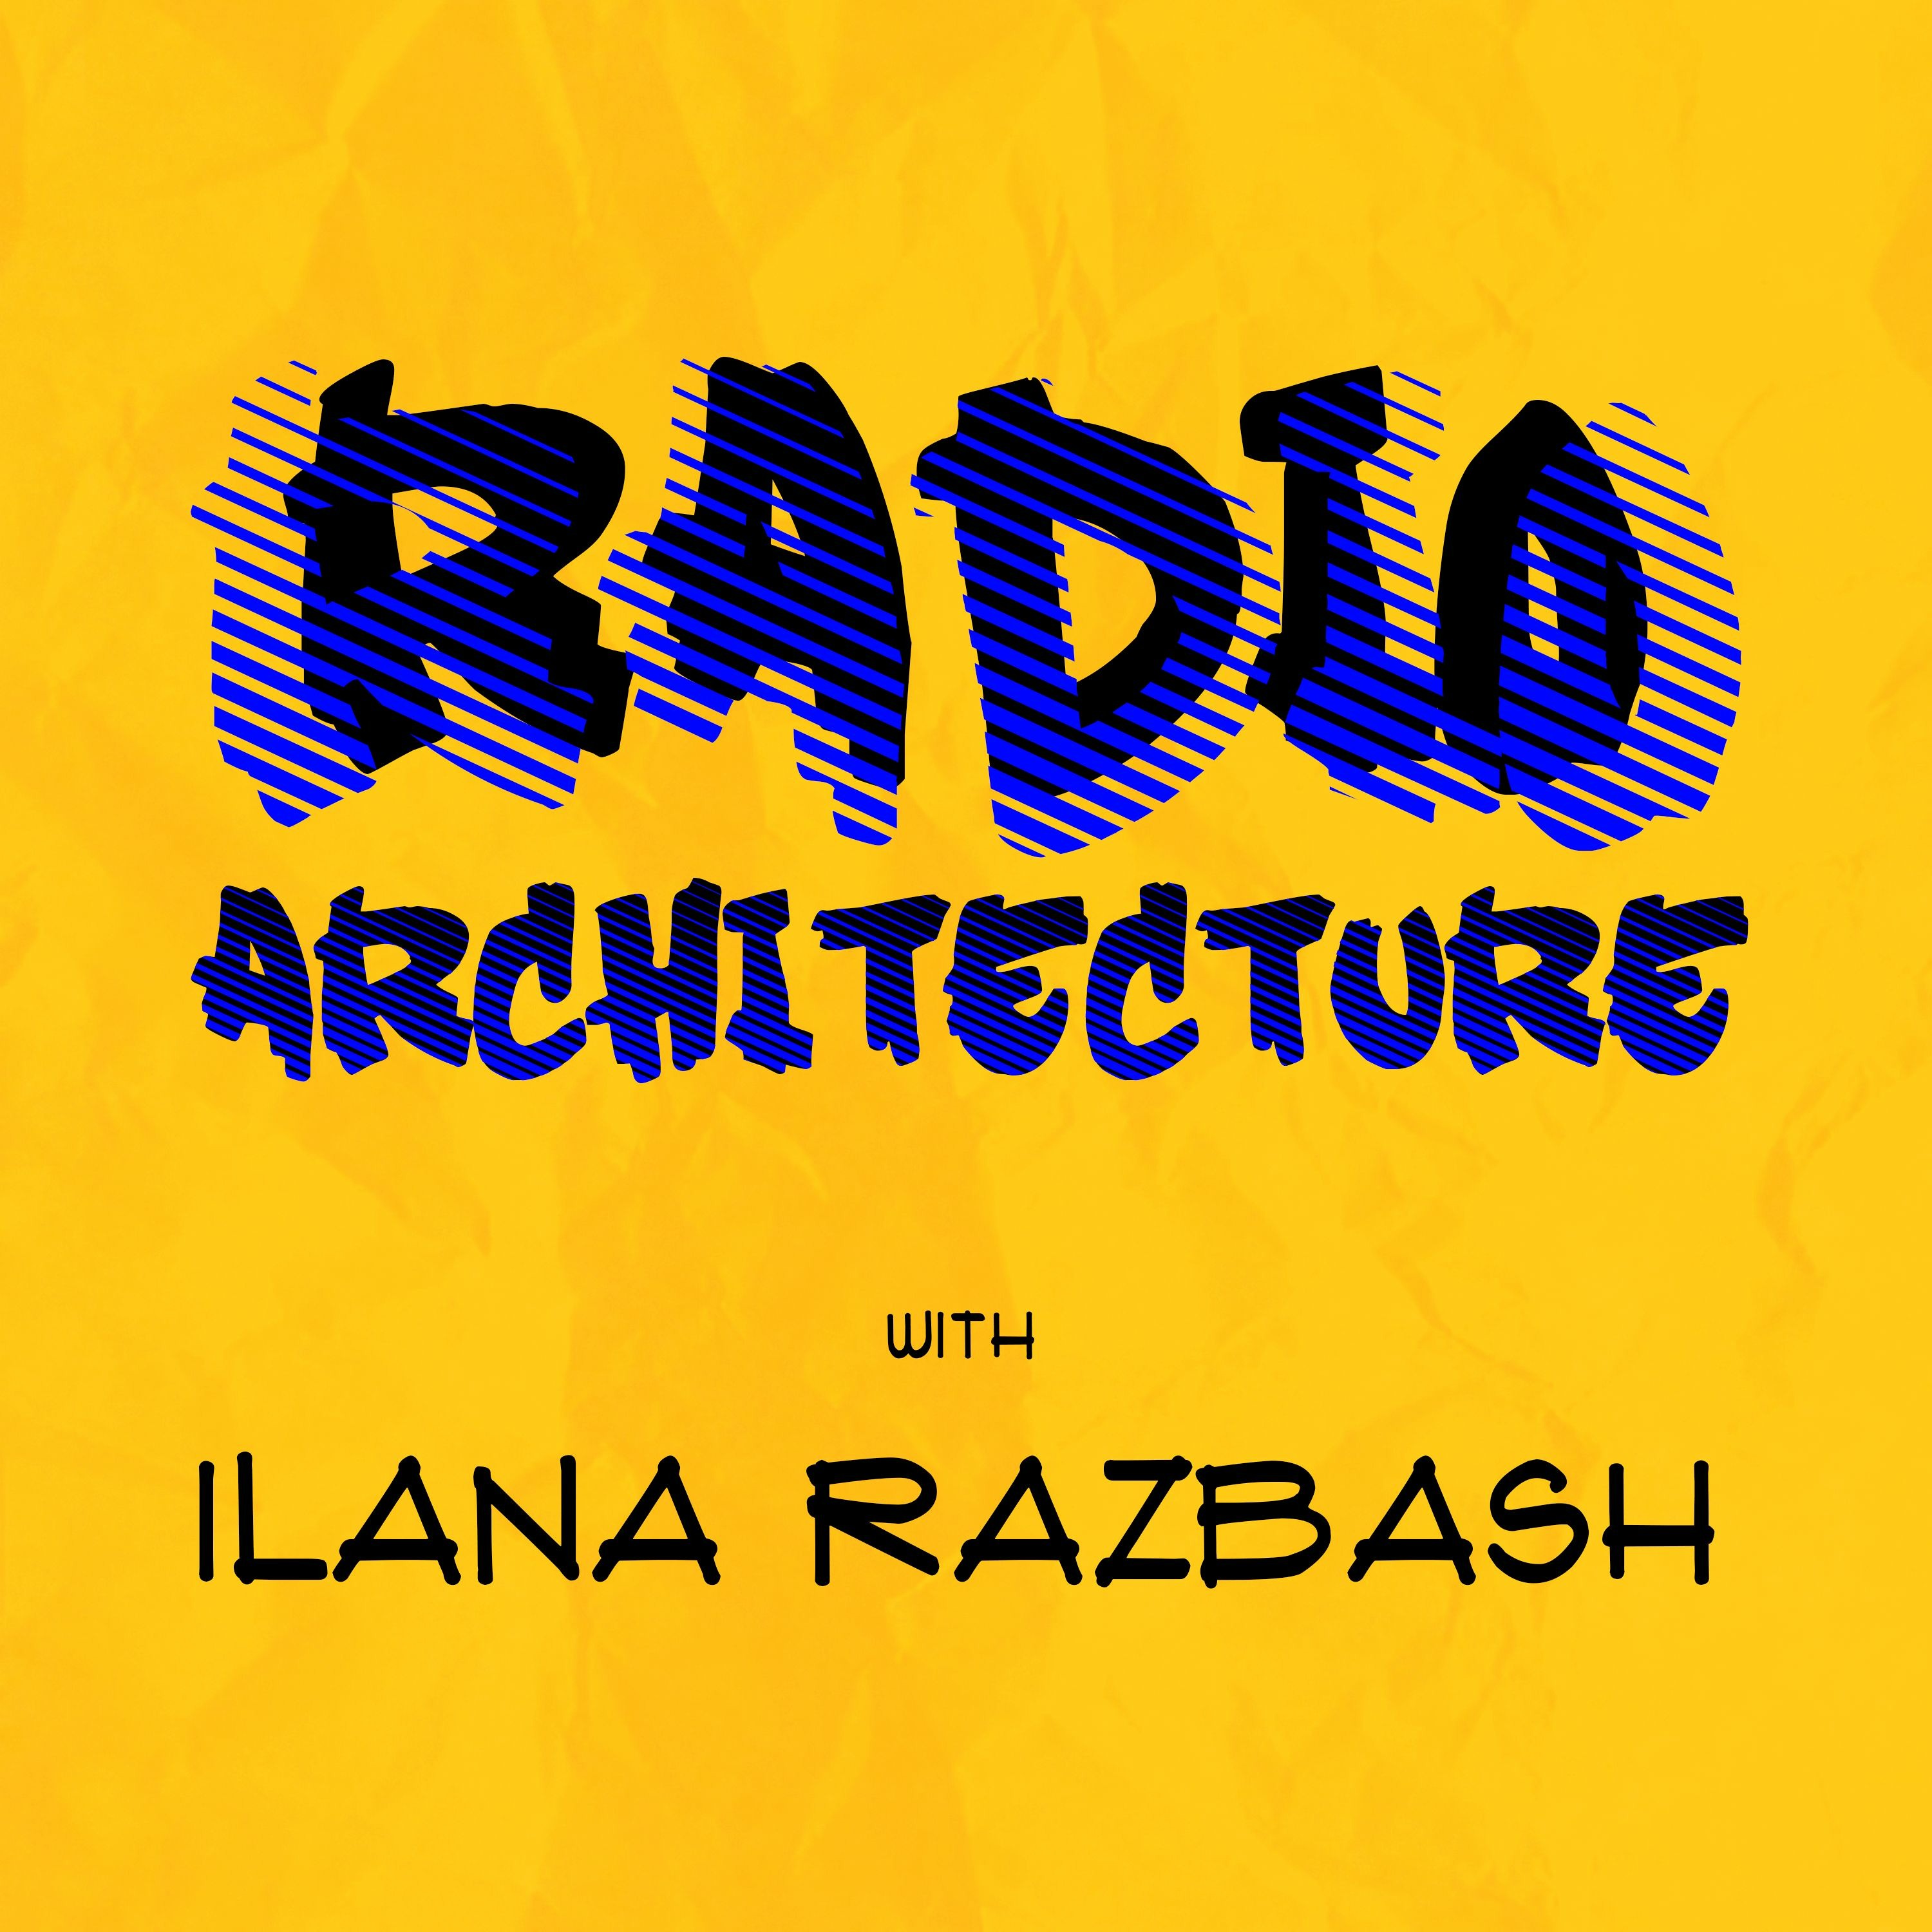 Radio Architecture With Ilana Razbash - Episode 20 (Sue Wittenoom)